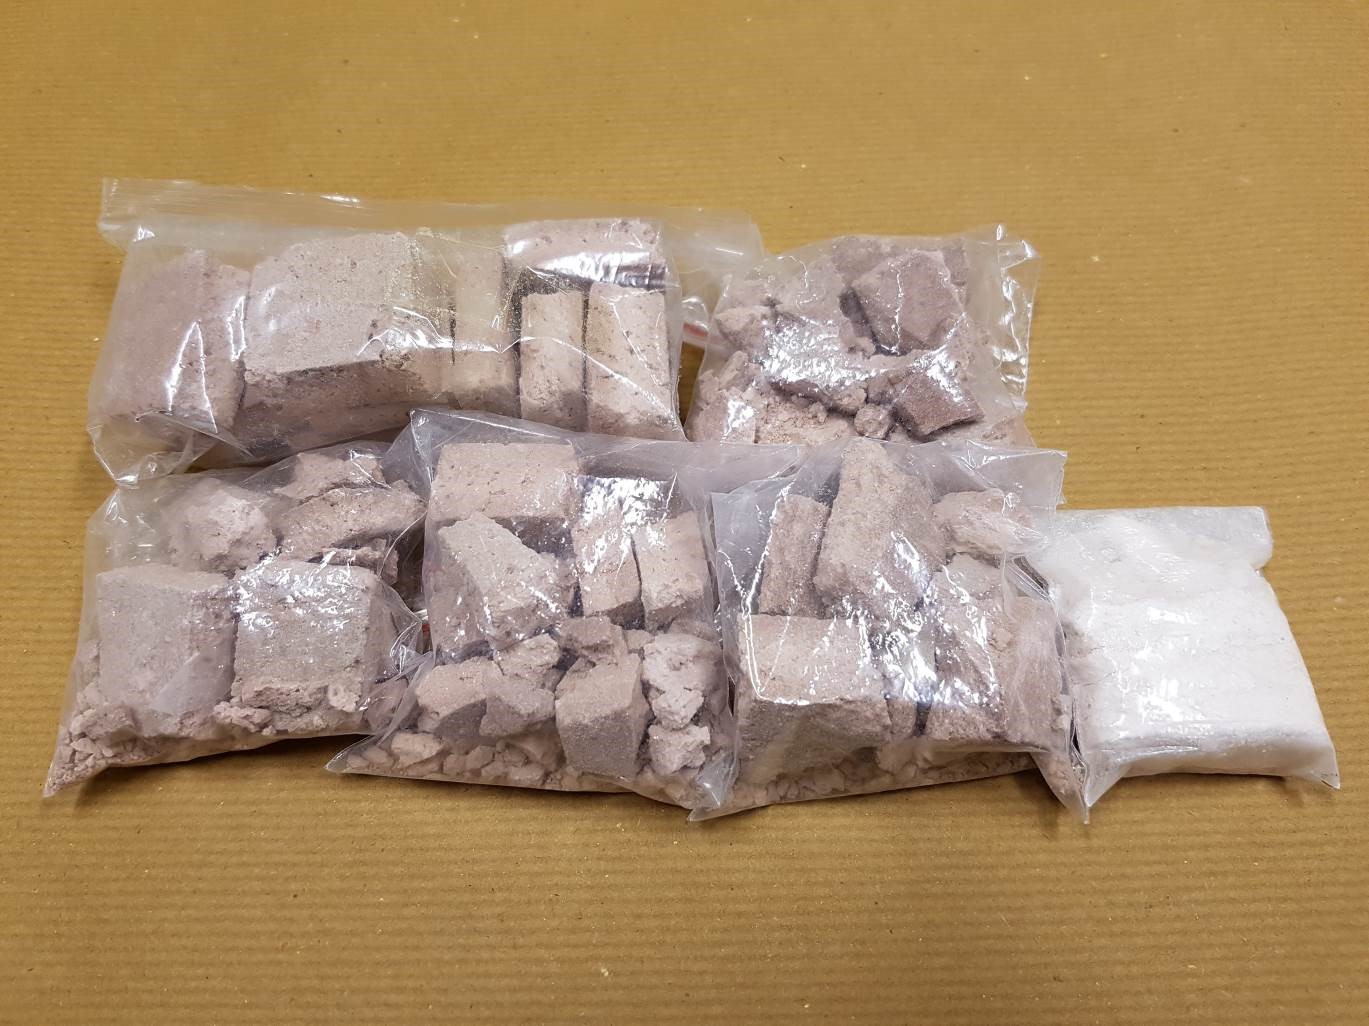 Drugs seized during CNB operation on 5 Jul 2017 off Bedok Reservoir Road